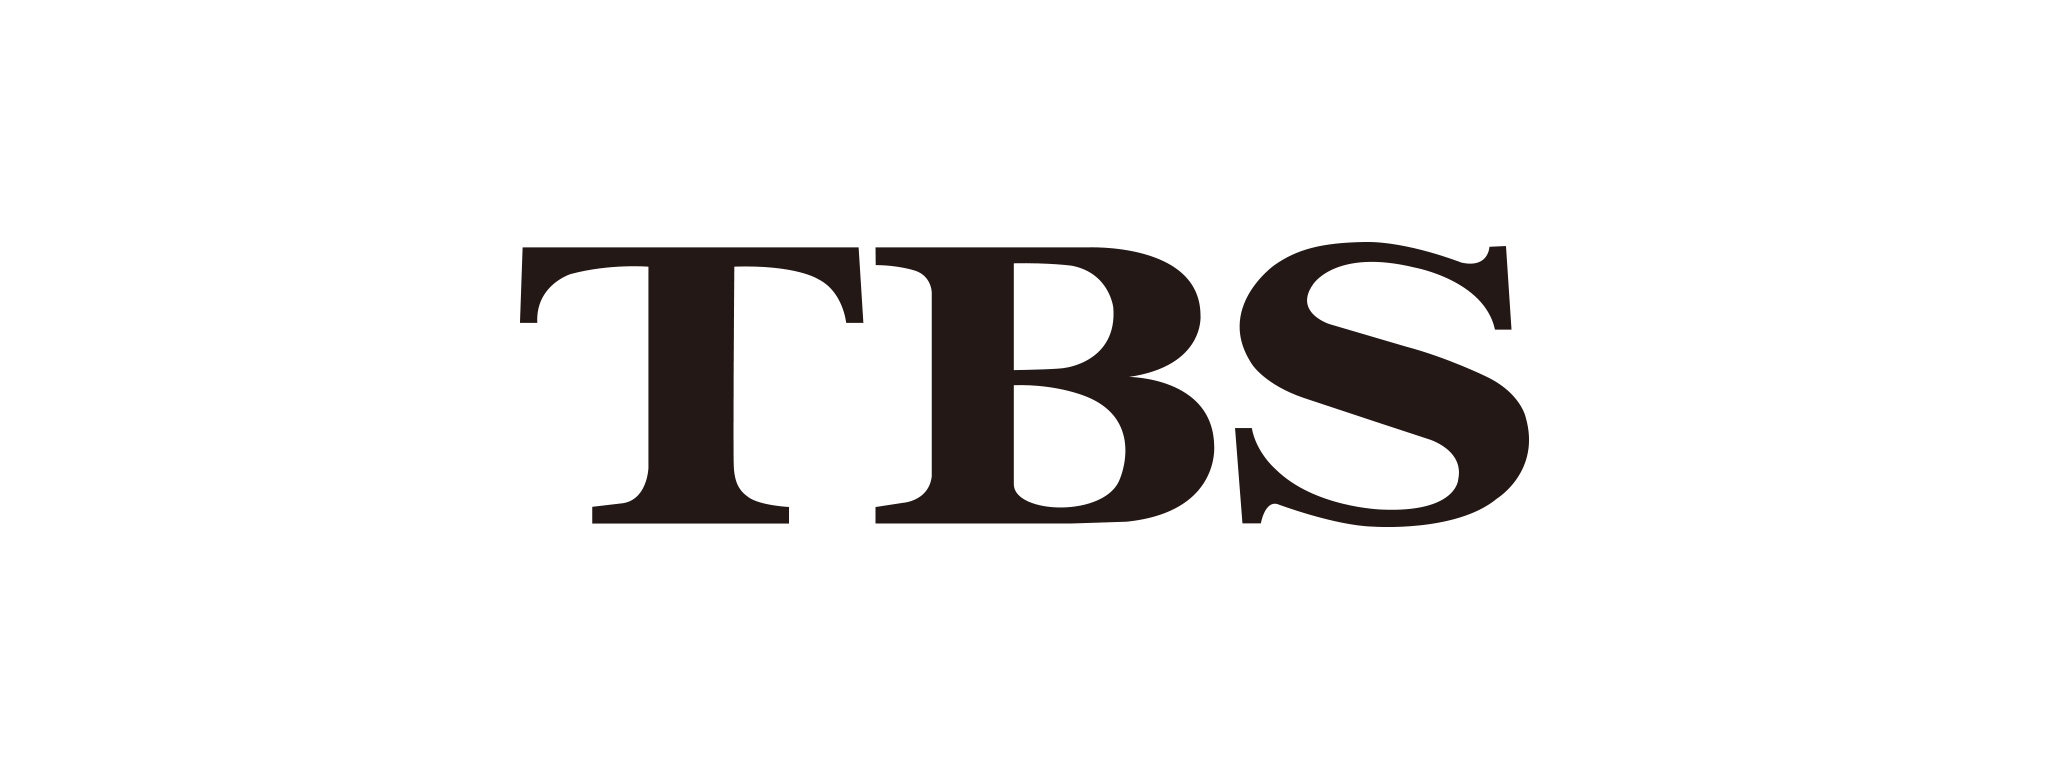 TBS Television Logo.jpeg